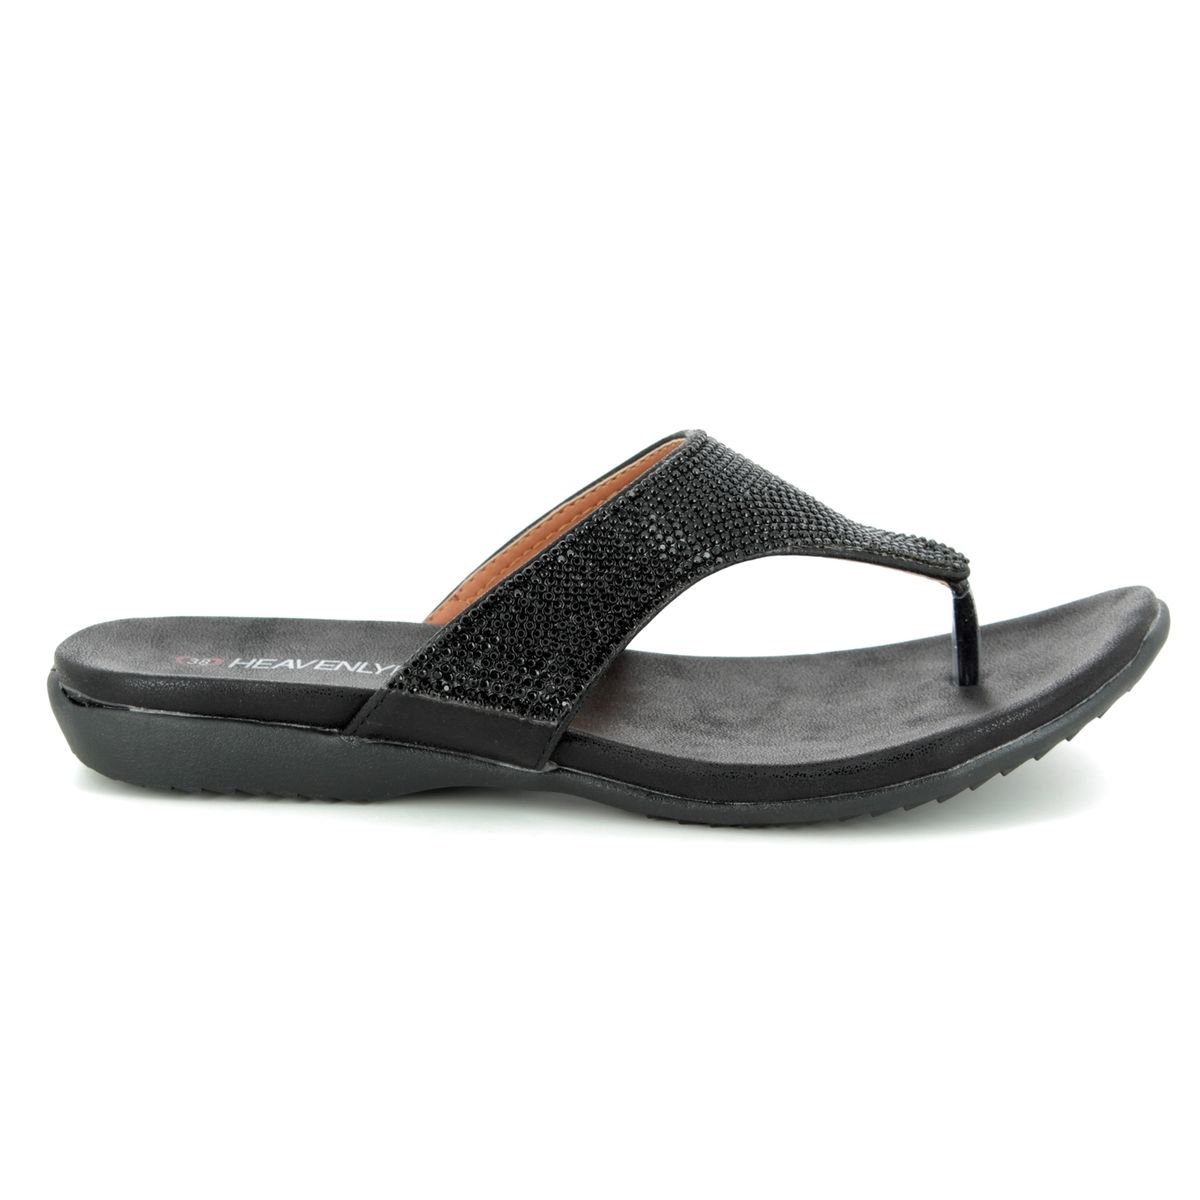 Heavenly Feet Maisie 9127-30 Black Toe Post Sandals